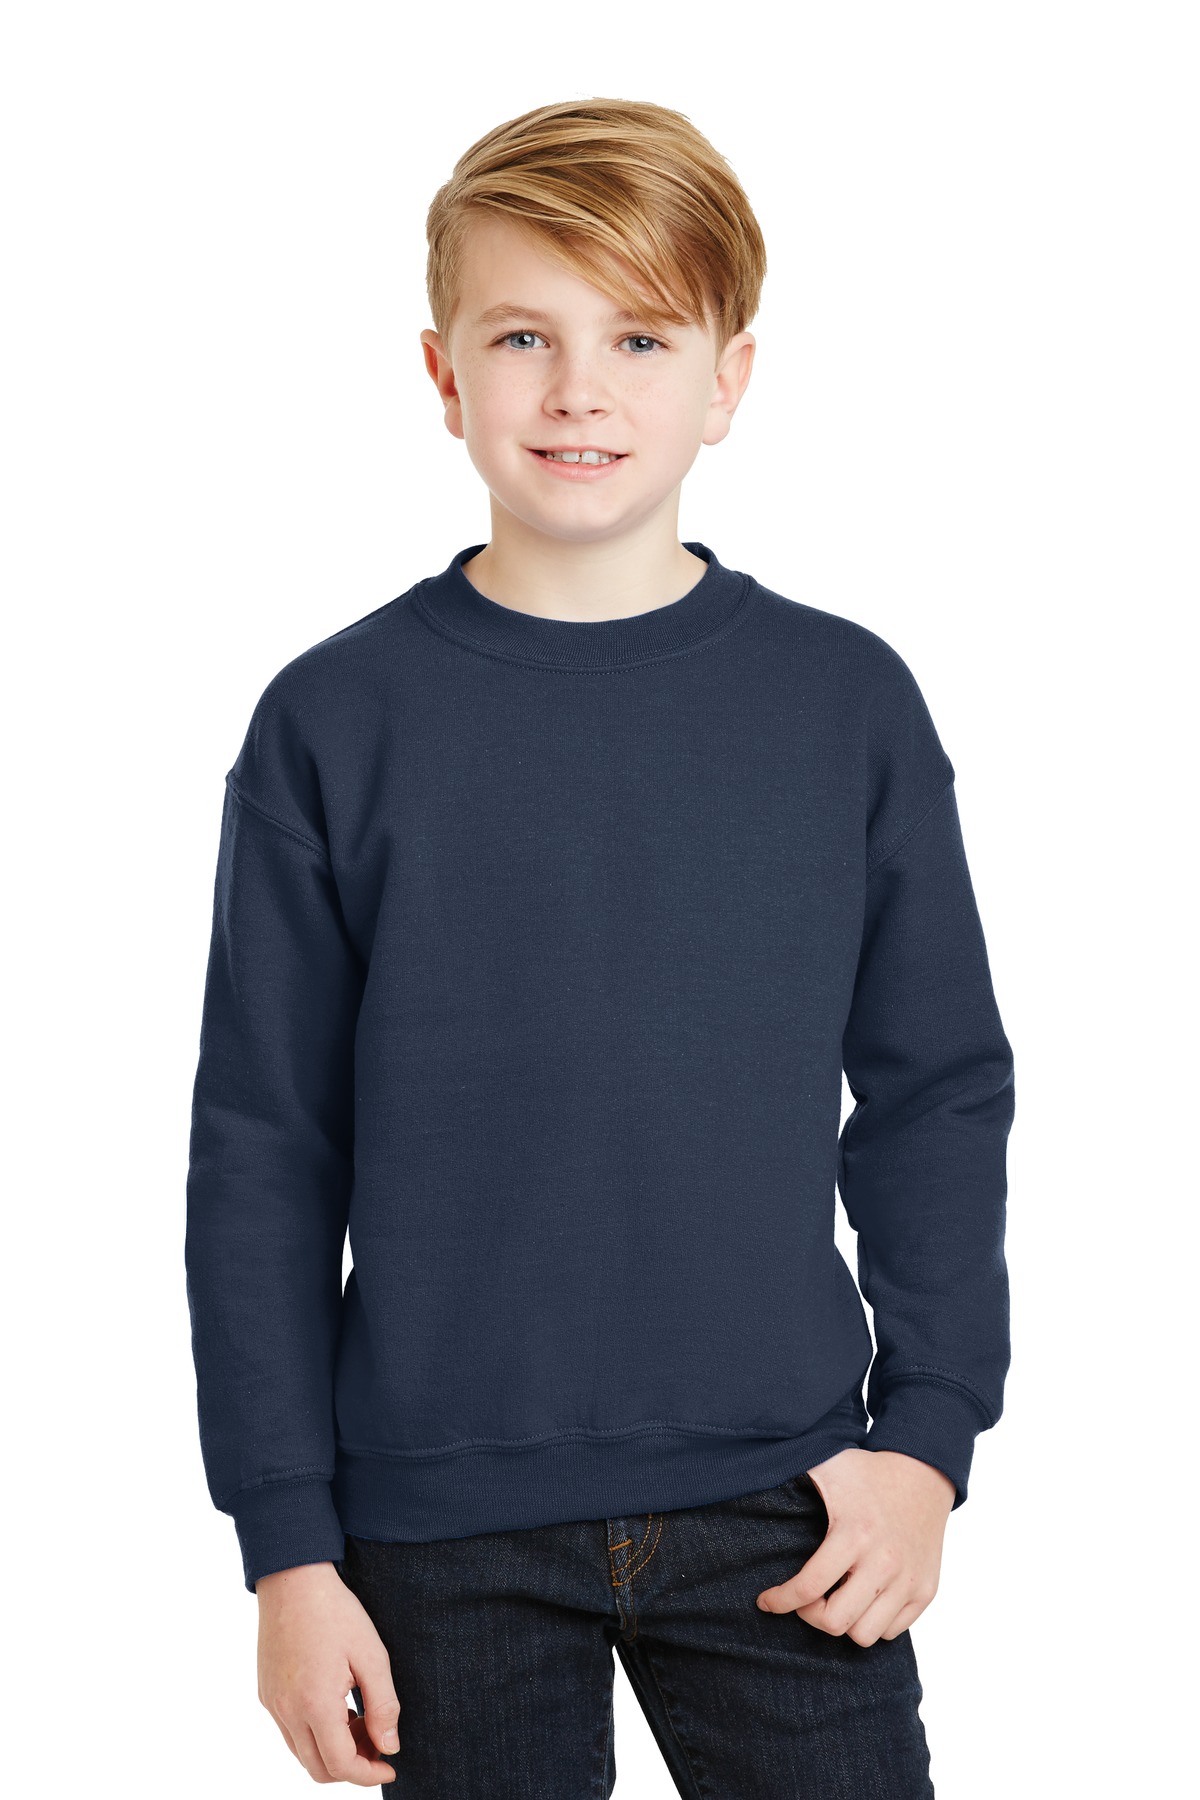 18000B YOUTH Gym Uniform -Embroidered Youth Unisex Crewneck Sweatshirt